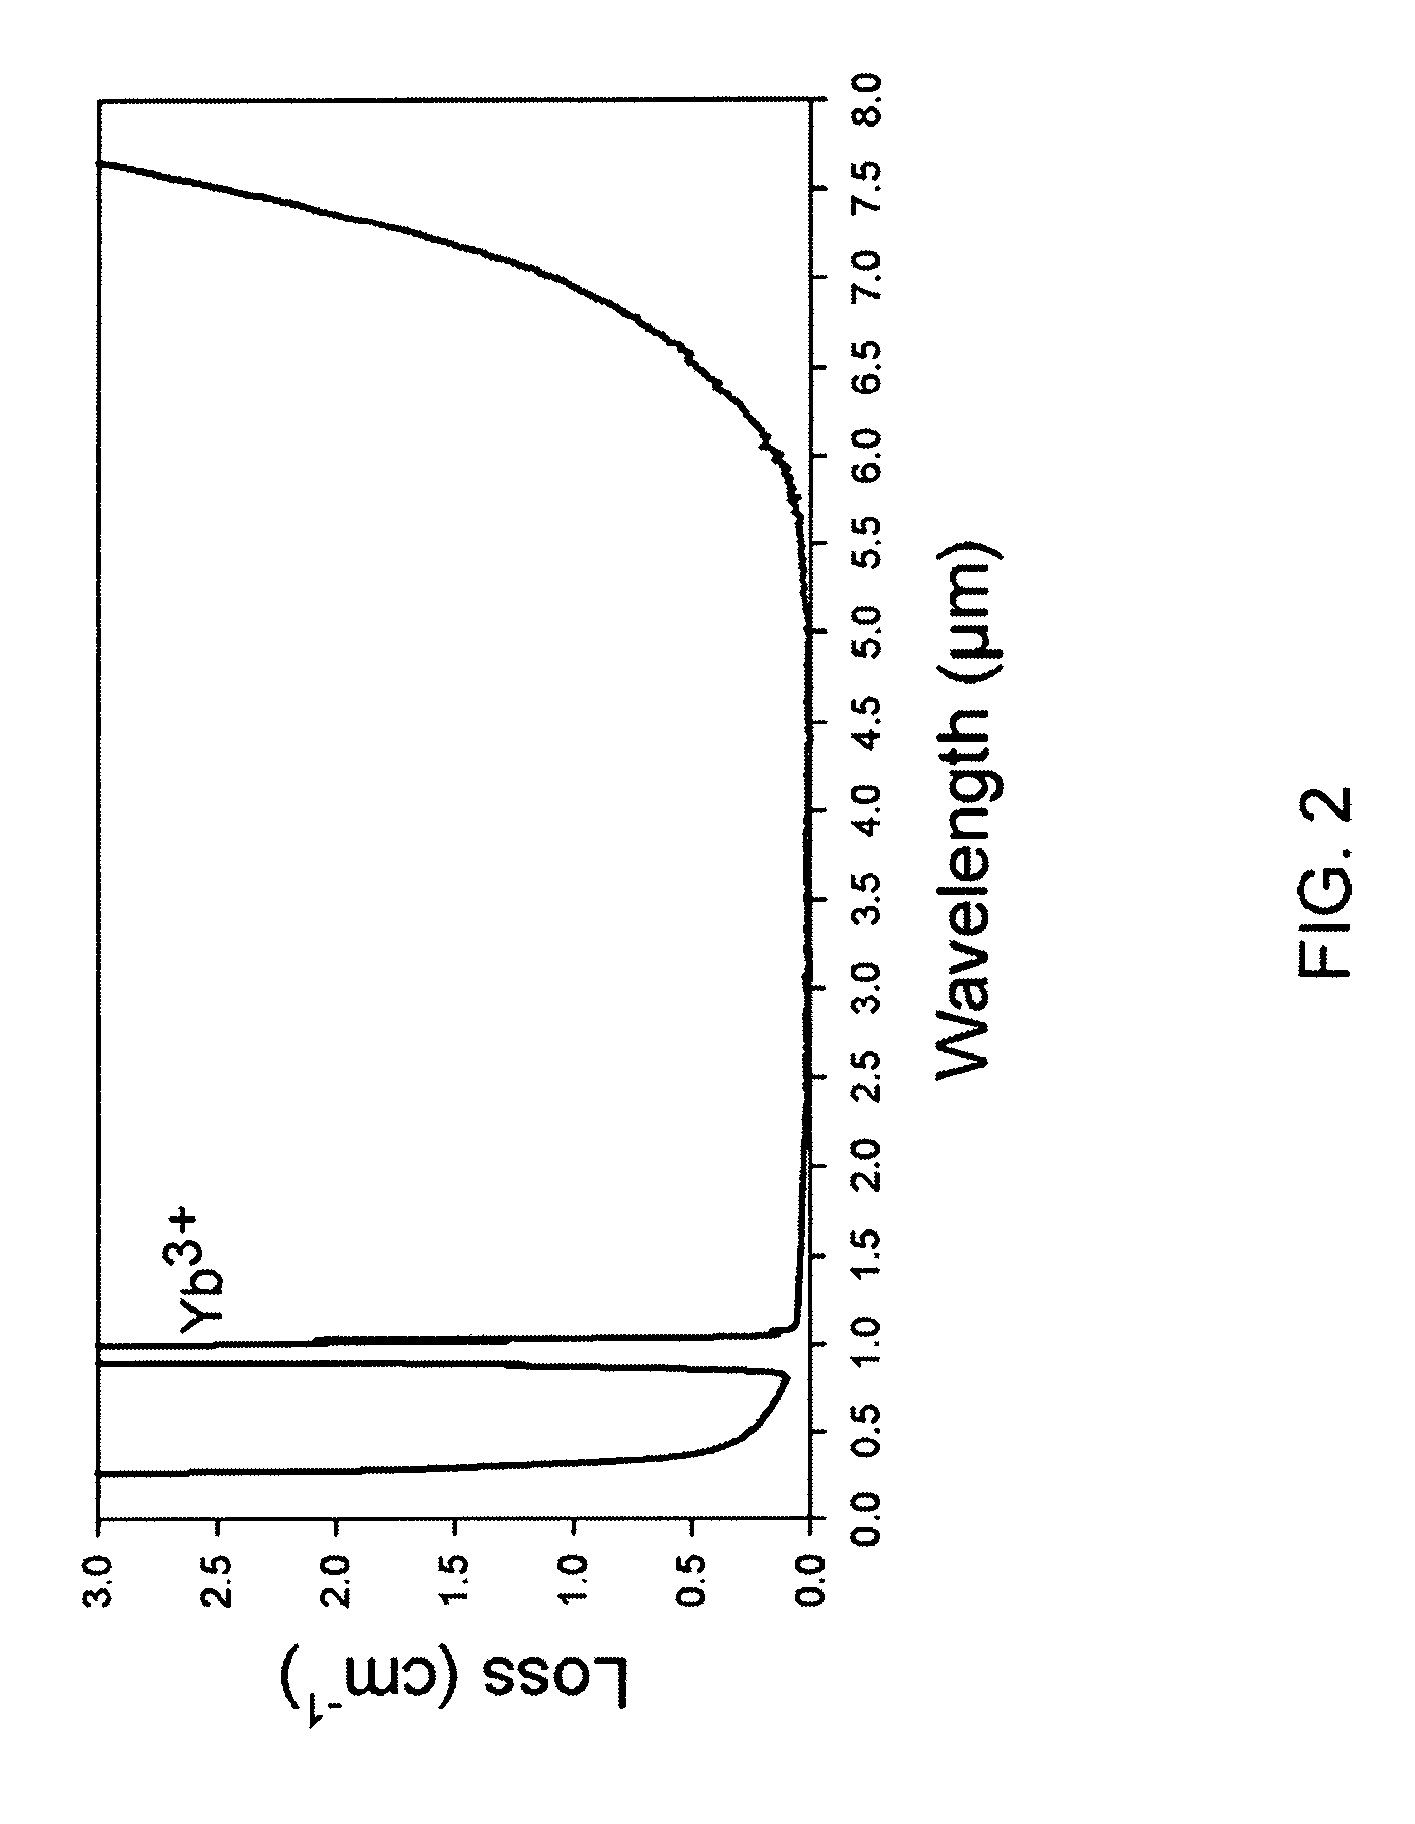 LiF-coated doped and undoped yttrium oxide